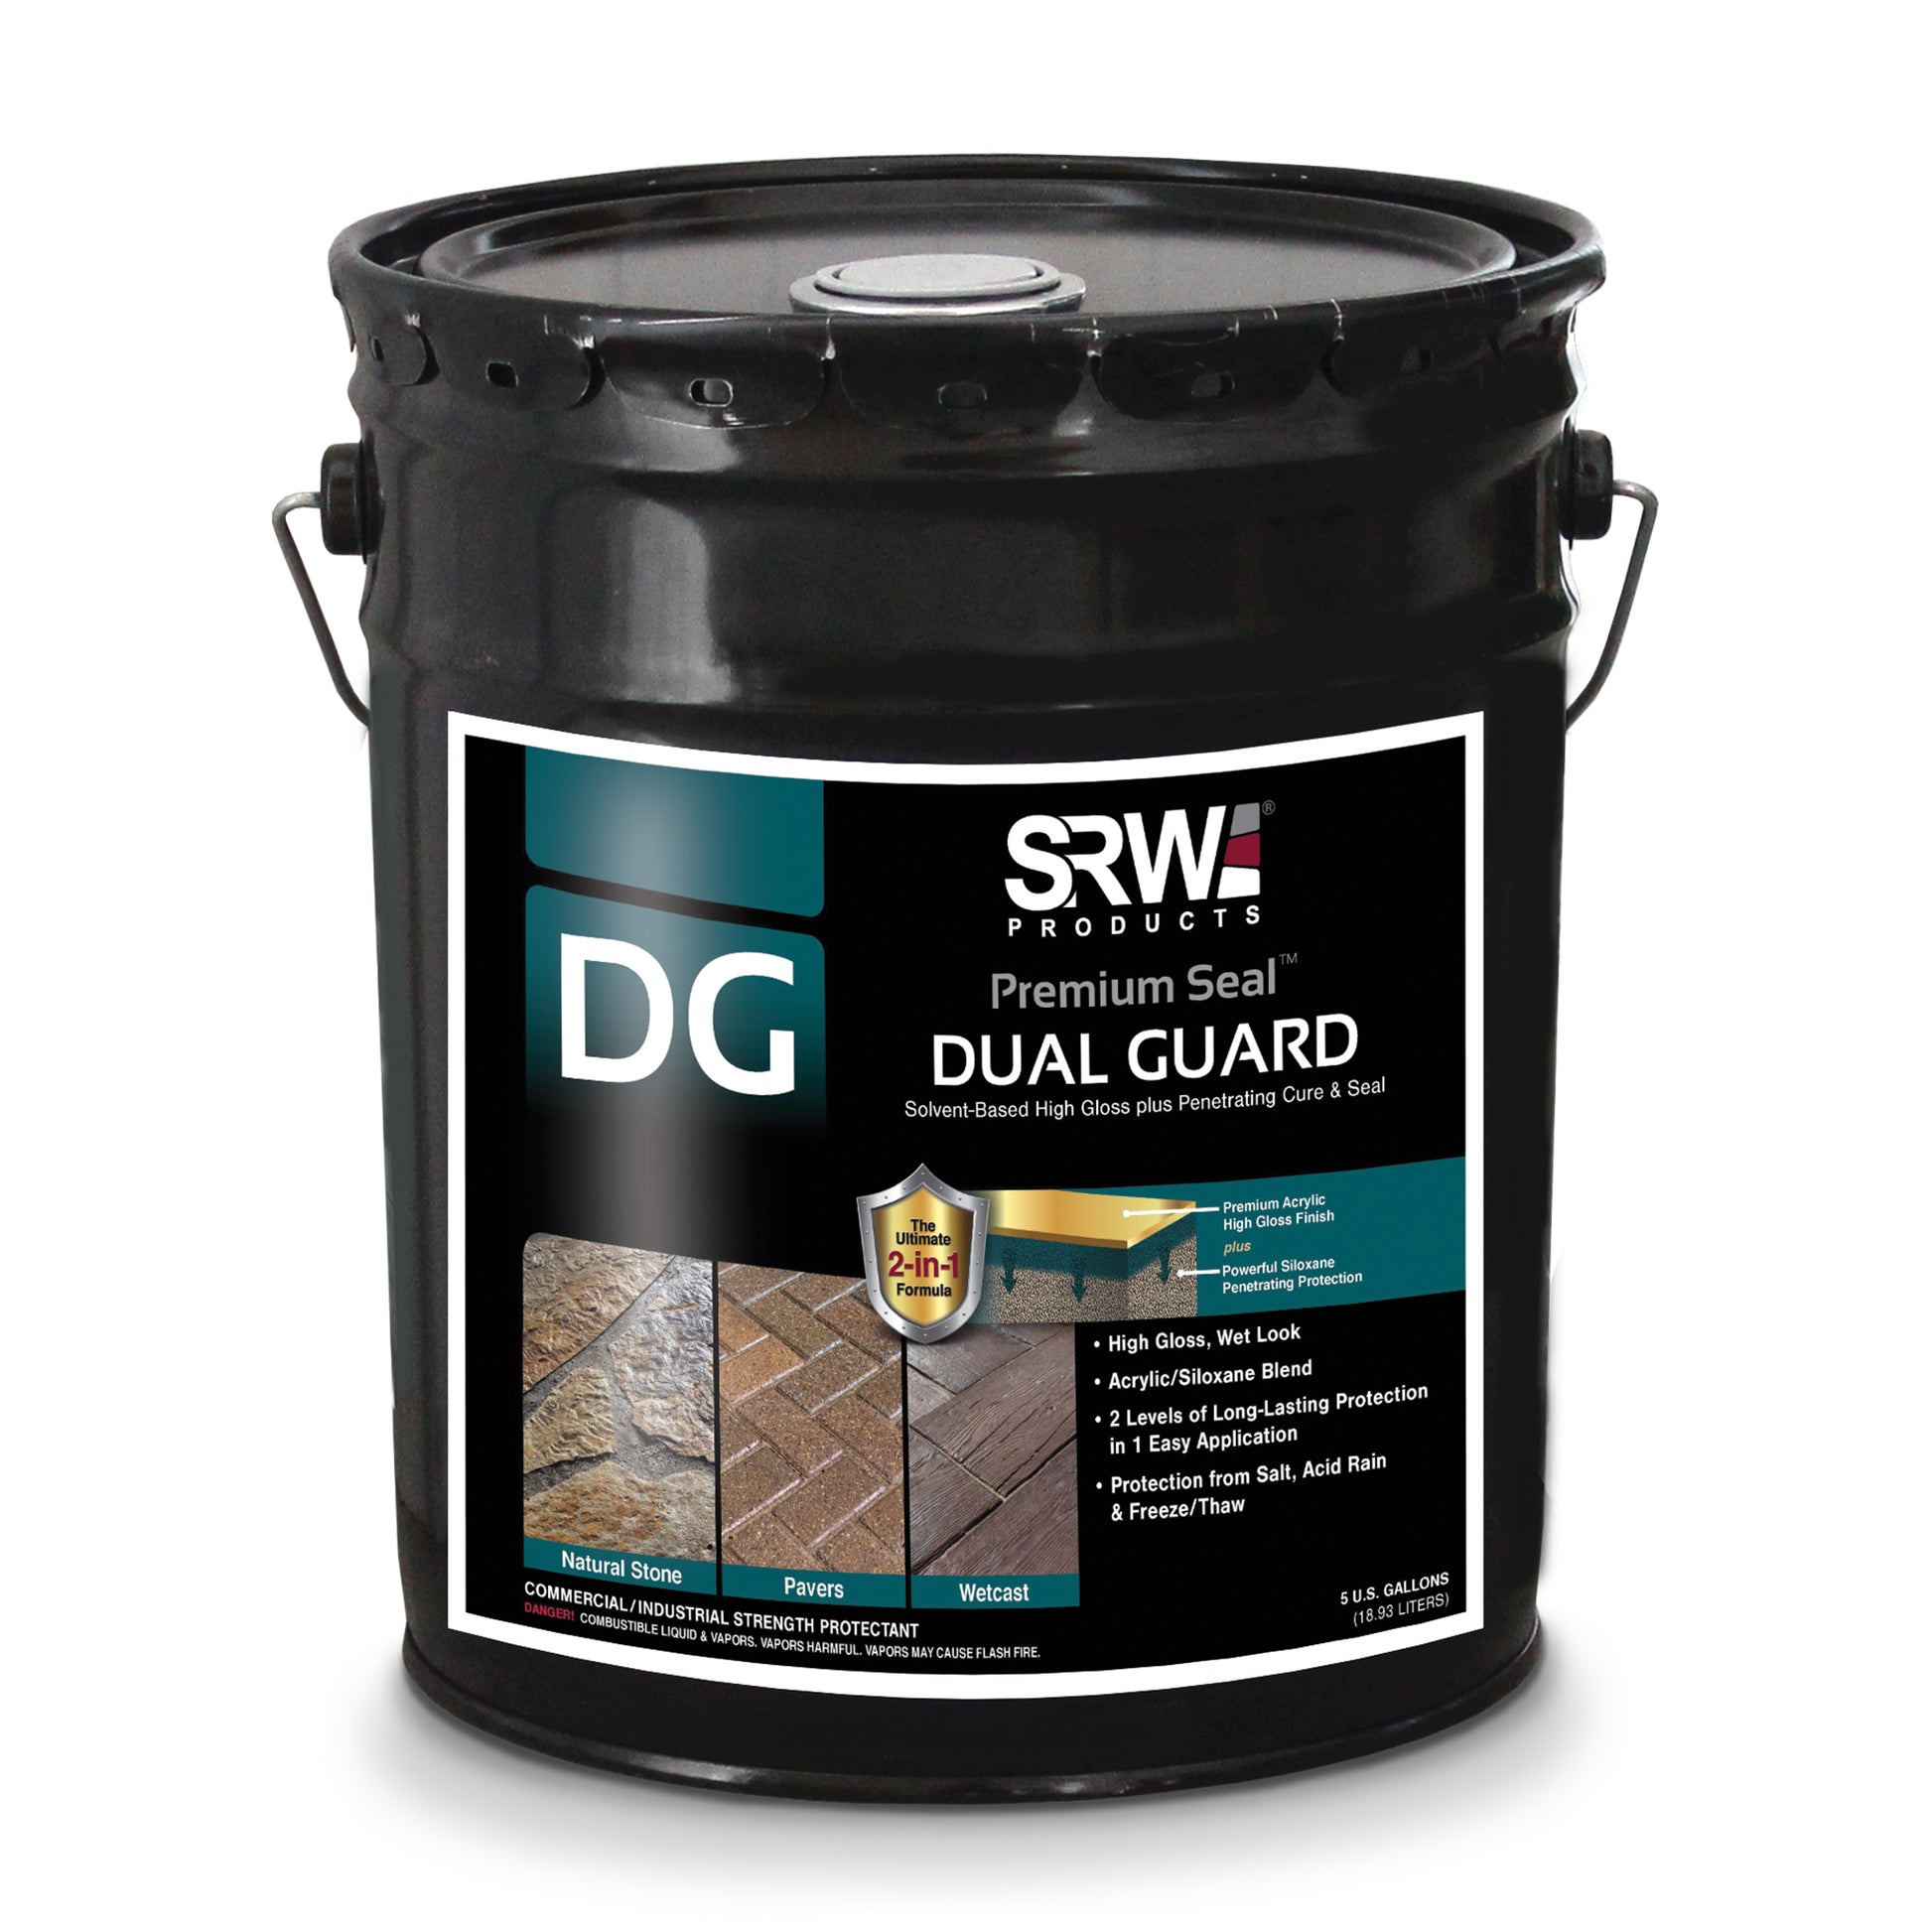 SRW Products DG Dual Guard - Premium Seal™ bucket